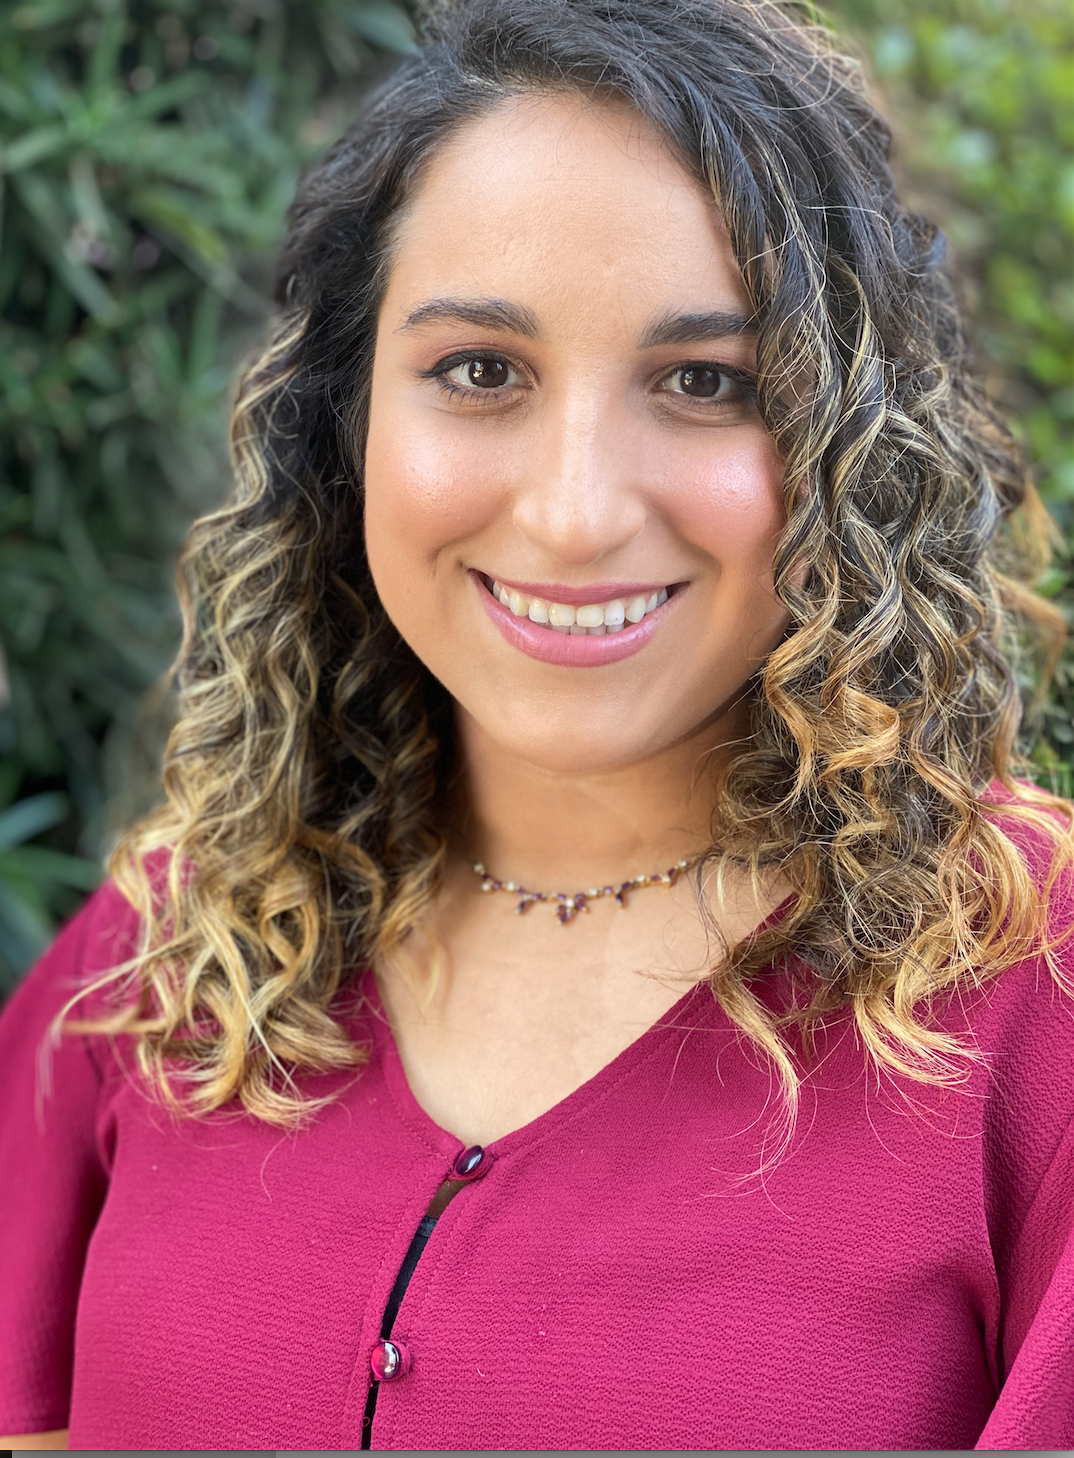 Therapist Tara Tehrani wearing a magenta button up shirt smiling at the camera